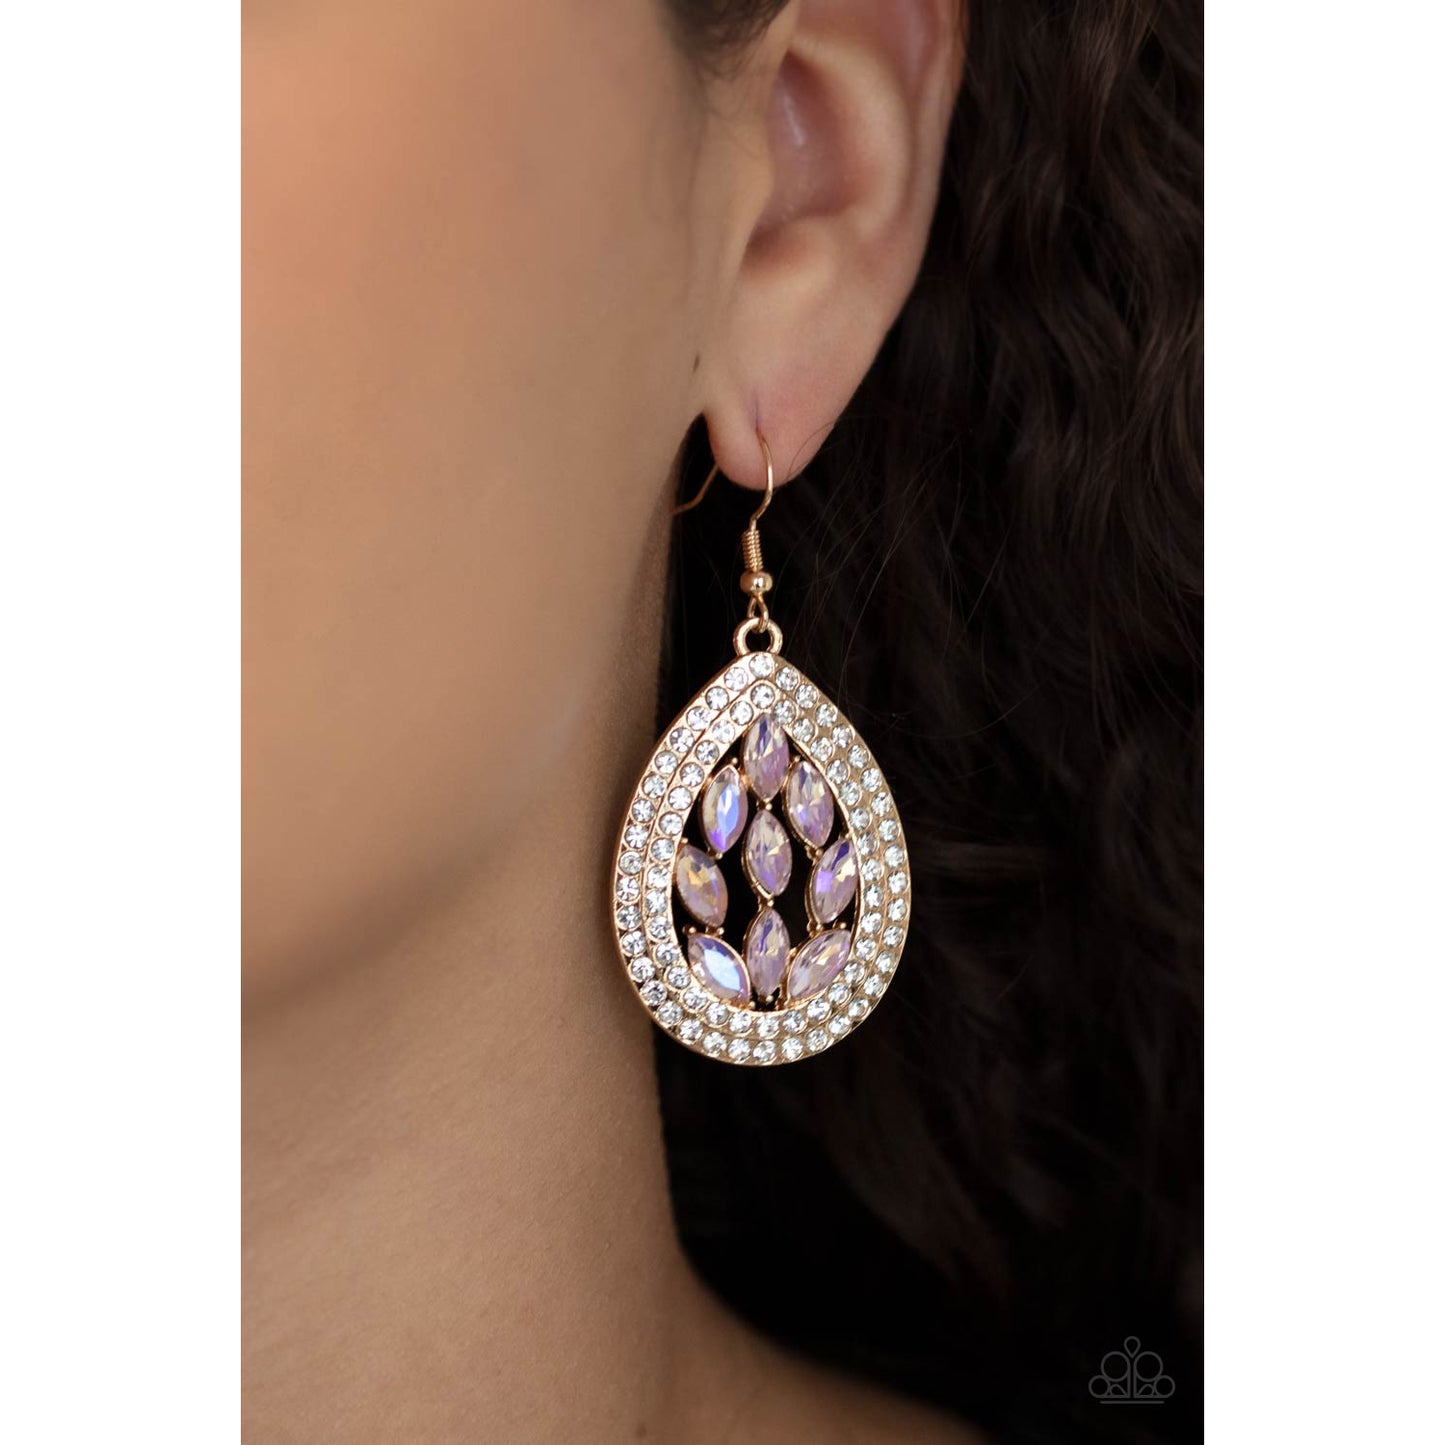 Encased Elegance - Gold Iridescent Rhinestone Earrings - Paparazzi Accessories - GlaMarous Titi Jewels